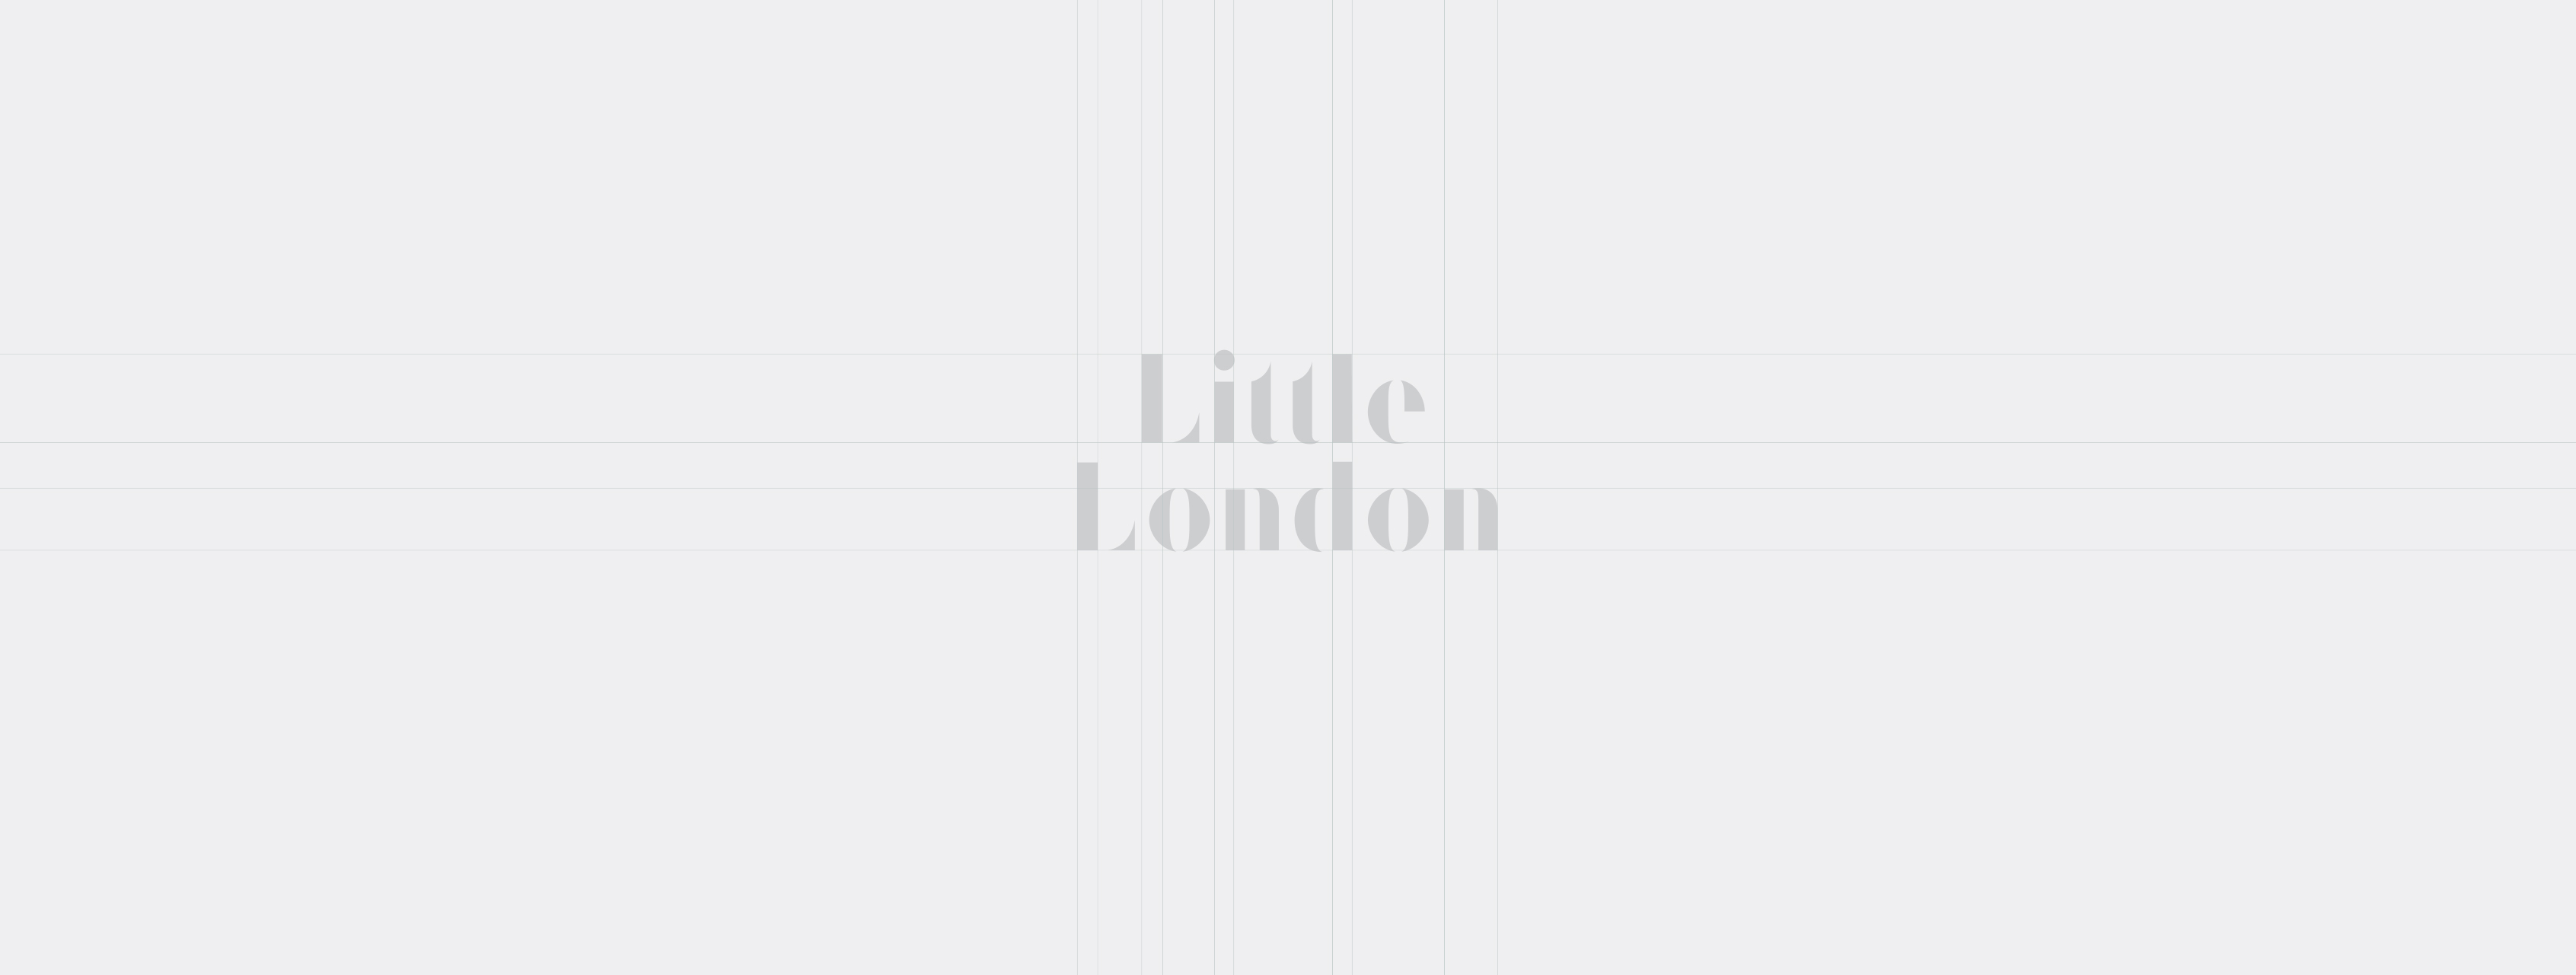 somewhere-little-london-logo